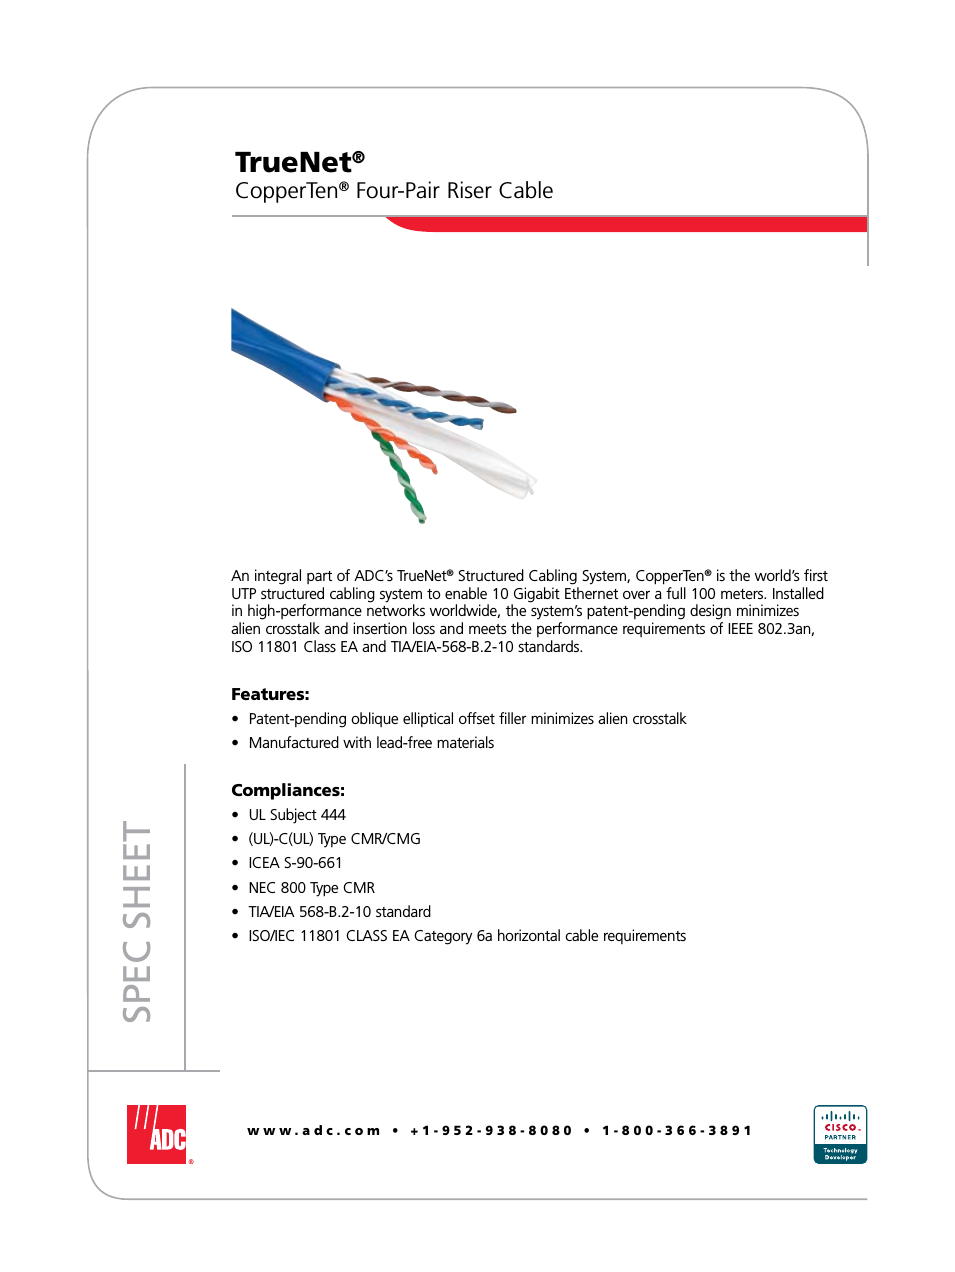 TrueNet Four-Pair Riser Cable